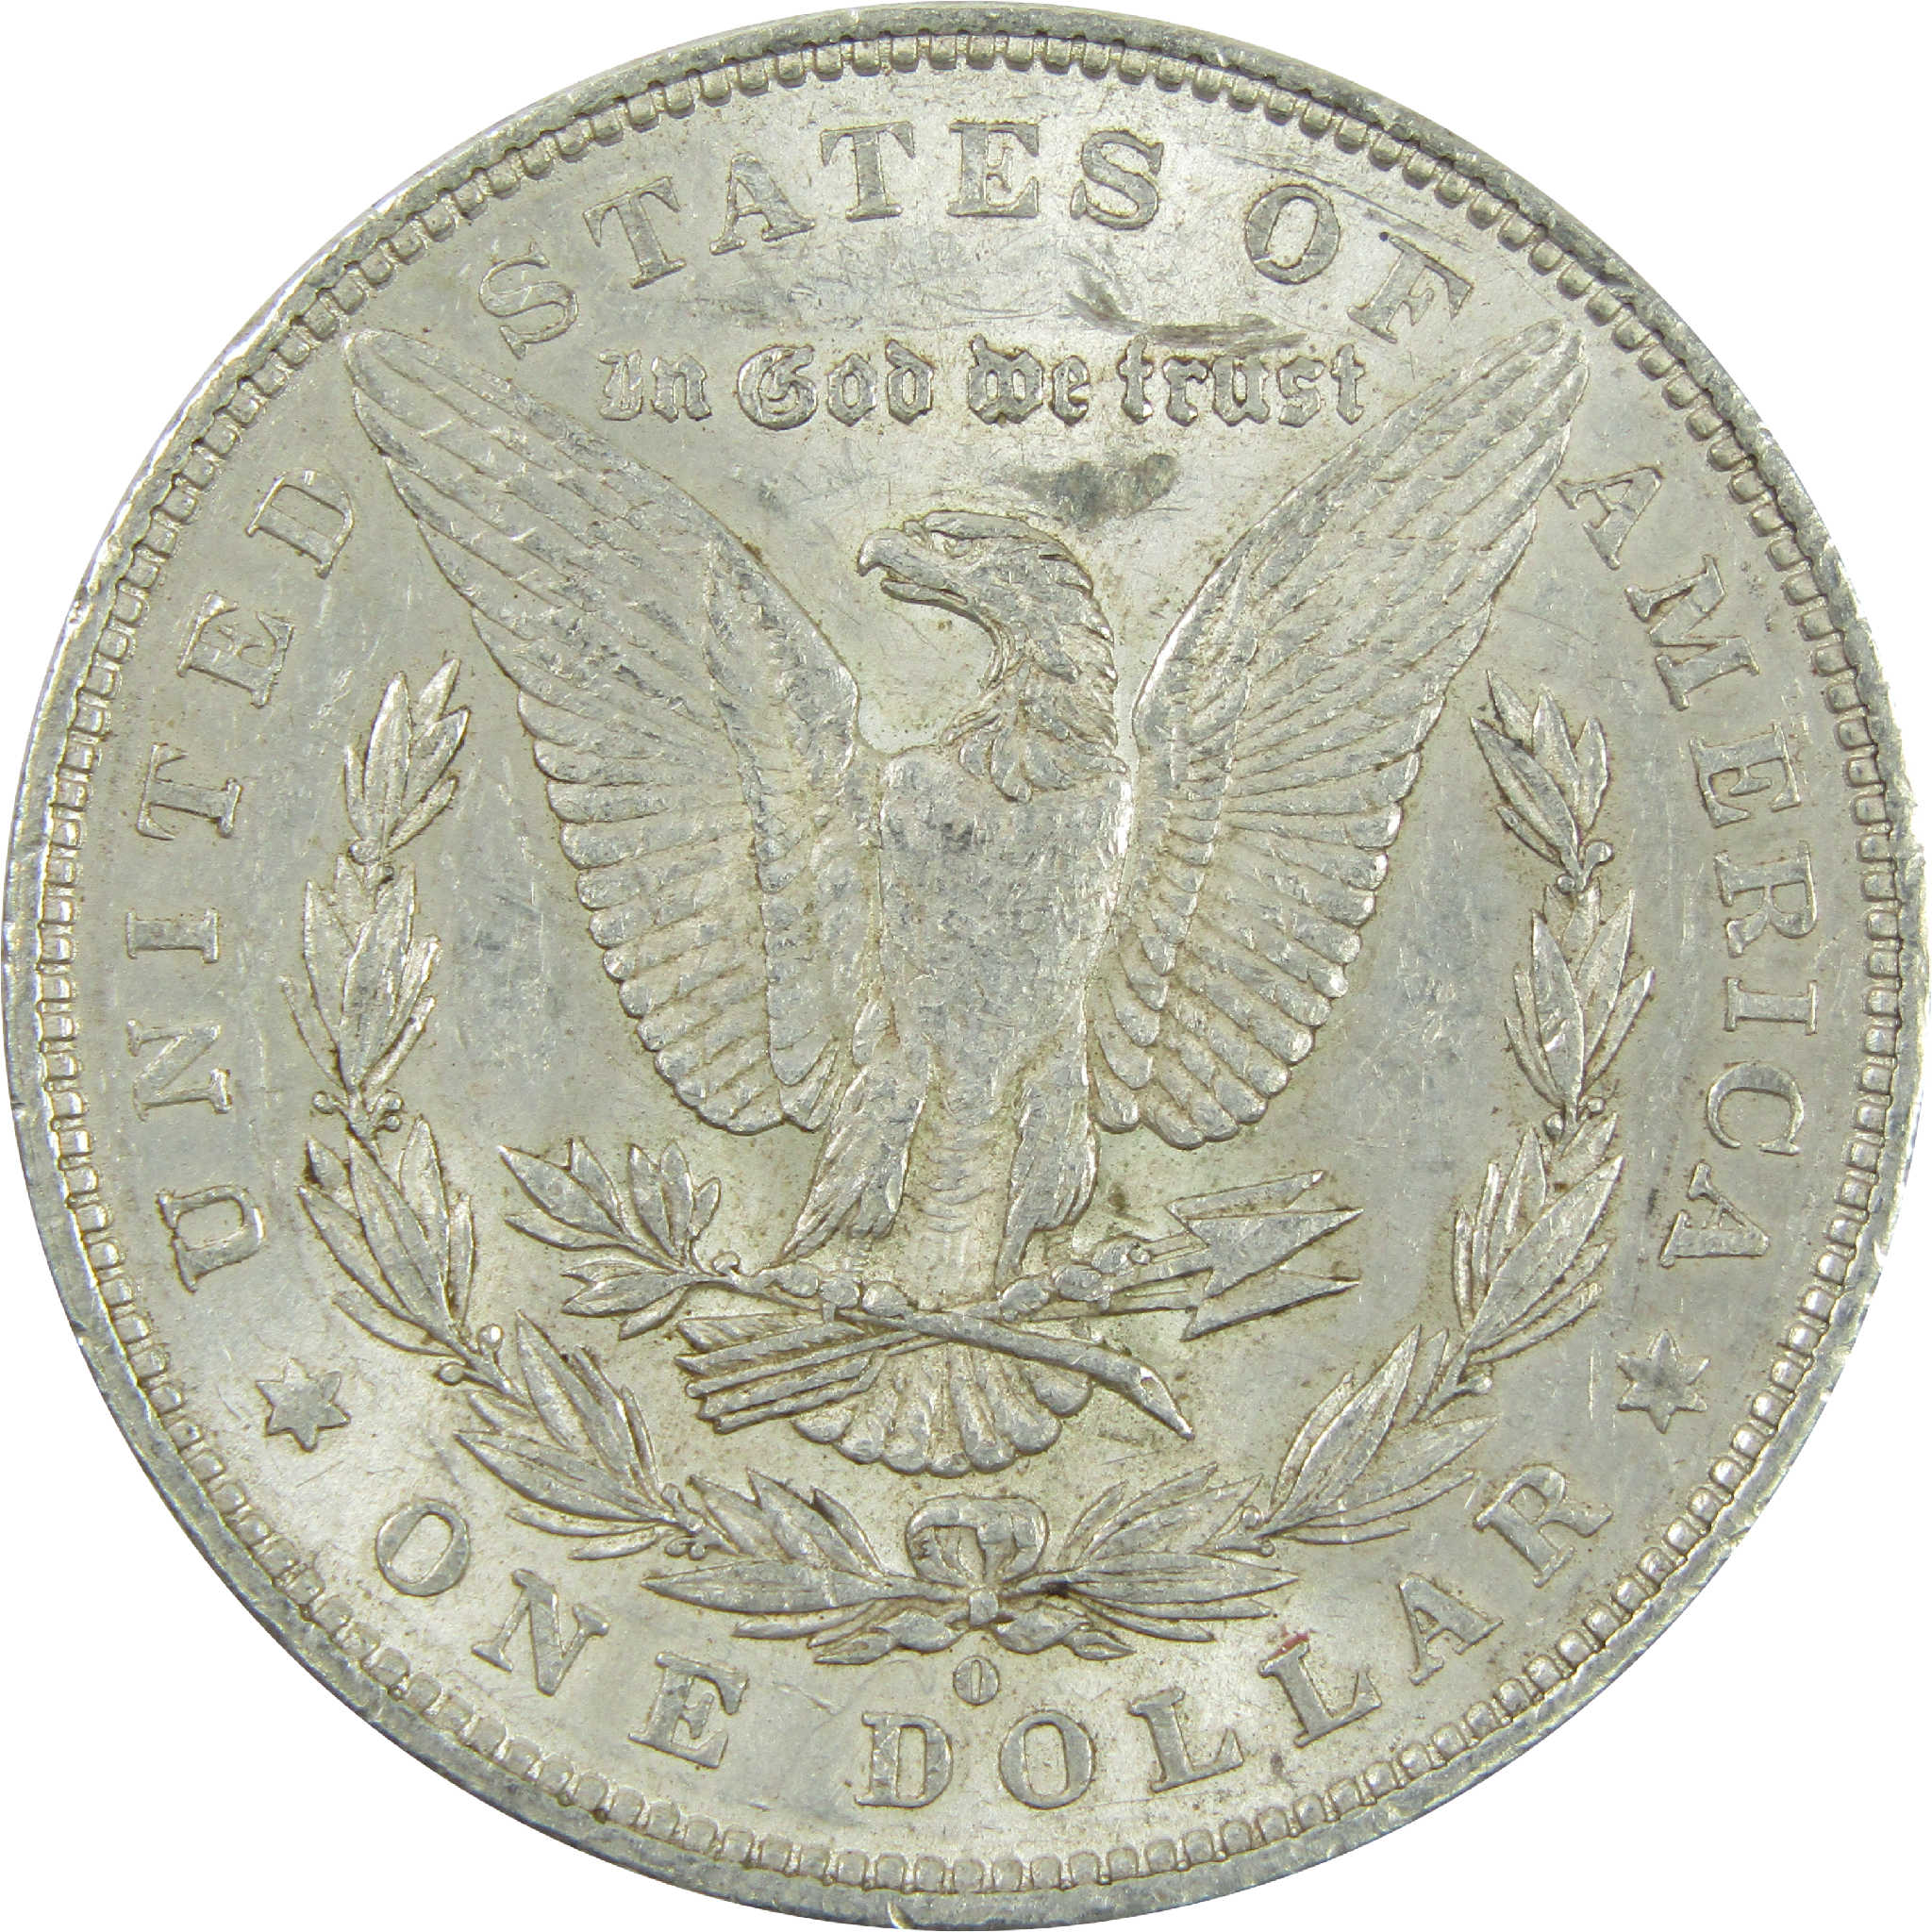 1879 O Morgan Dollar AU About Uncirculated Silver $1 Coin SKU:I13503